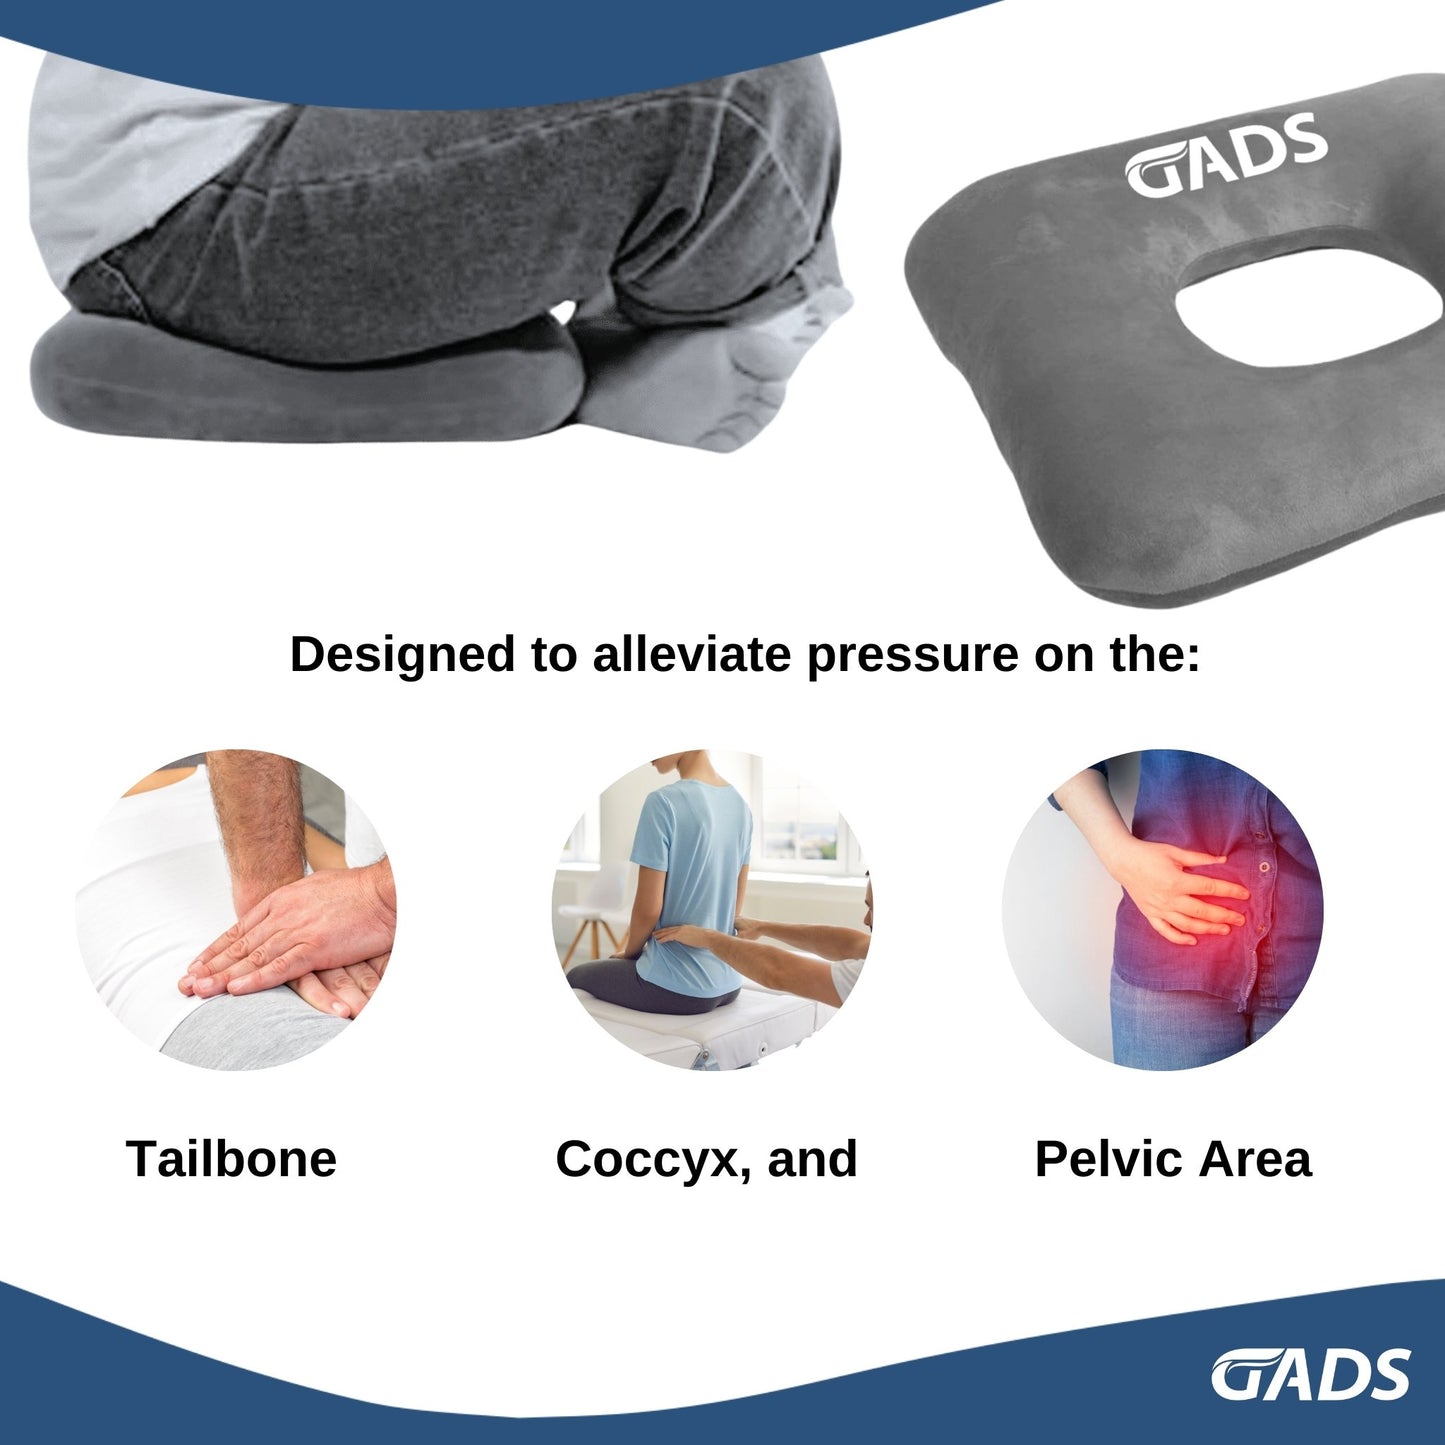 GADS Donut Pillow Tailbone Cushion - Ergonomic Comfort for Hemorrhoids, Post-Surgery, Pregnancy, and Pressure Relief